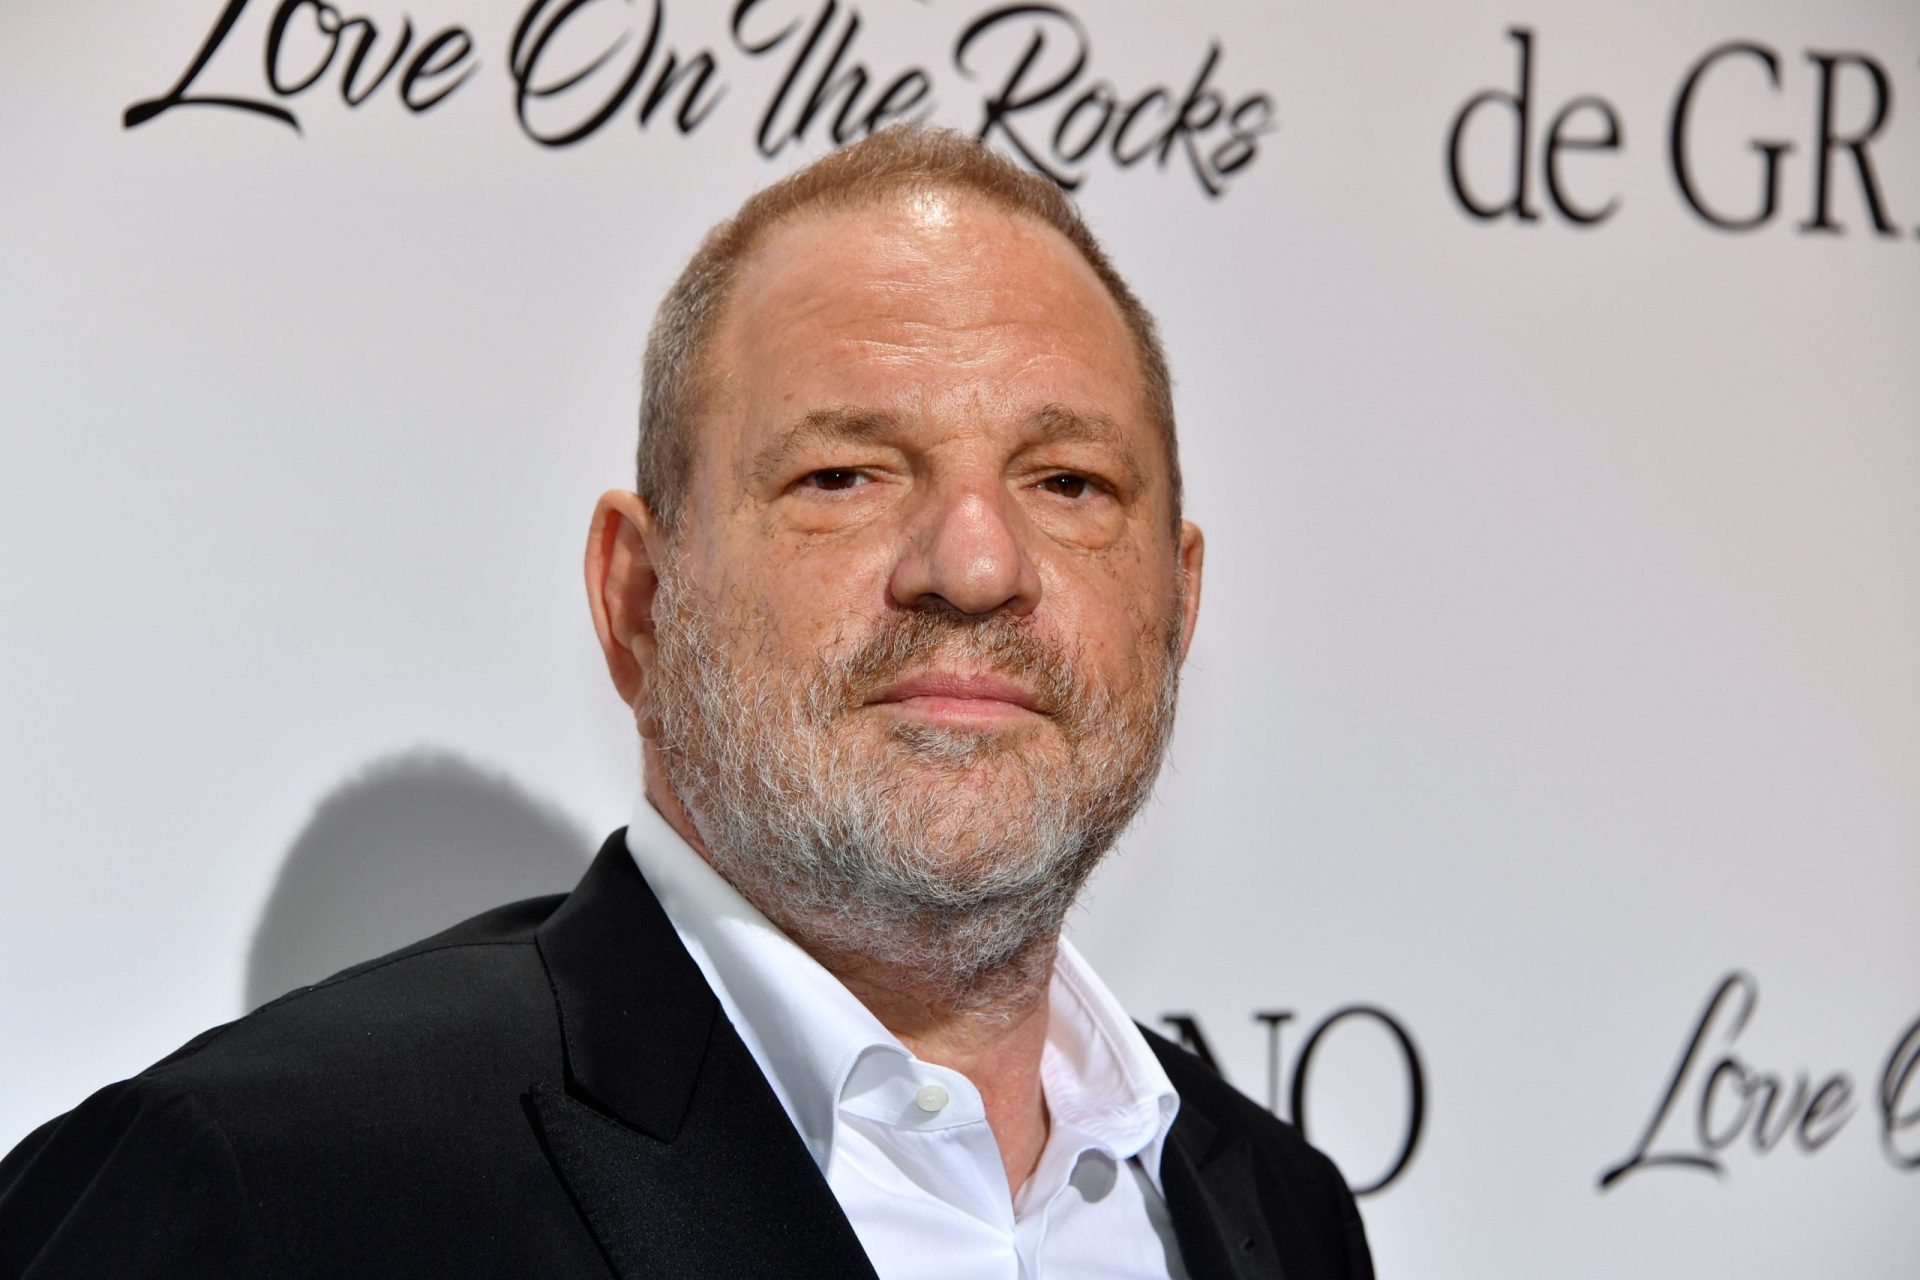 Jovem menor de idade acusa Harvey Weinstein de absusos sexuais